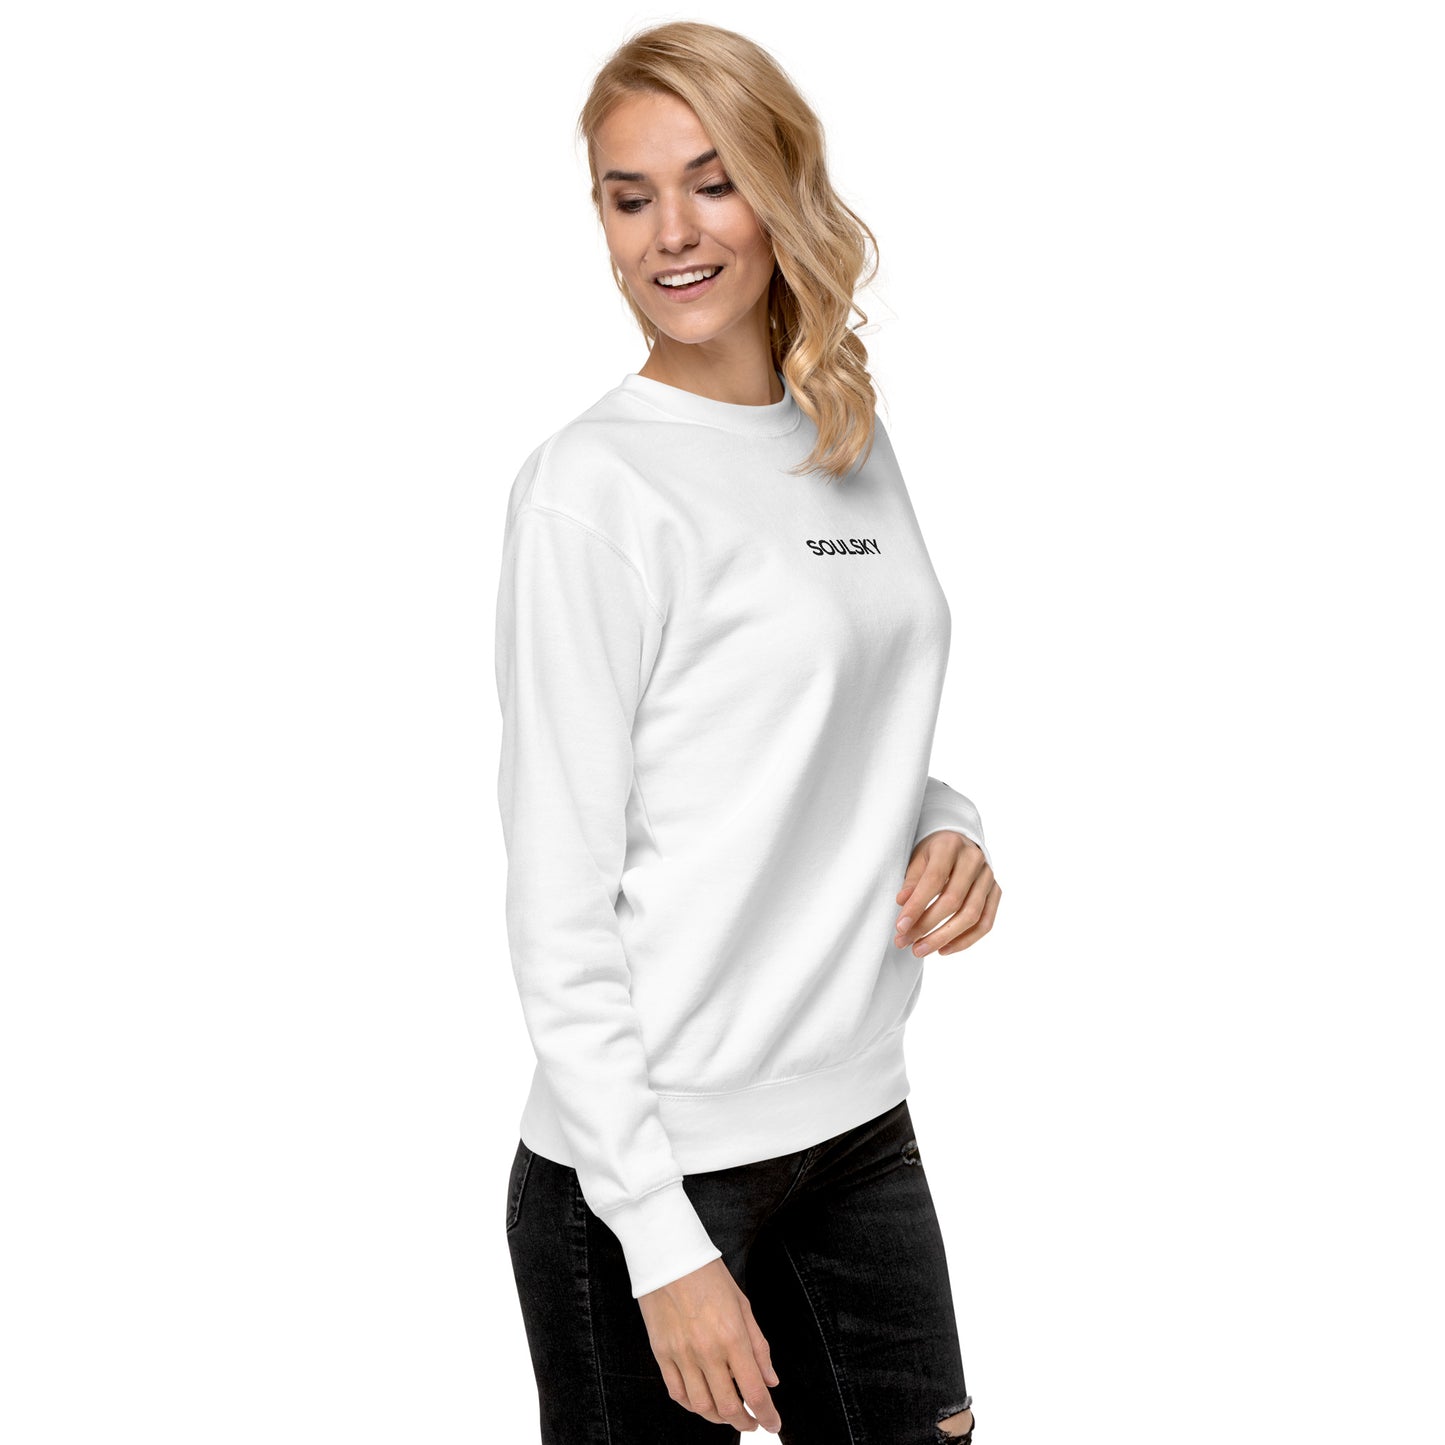 SOULSKY Classic Crew Sweatshirt - White